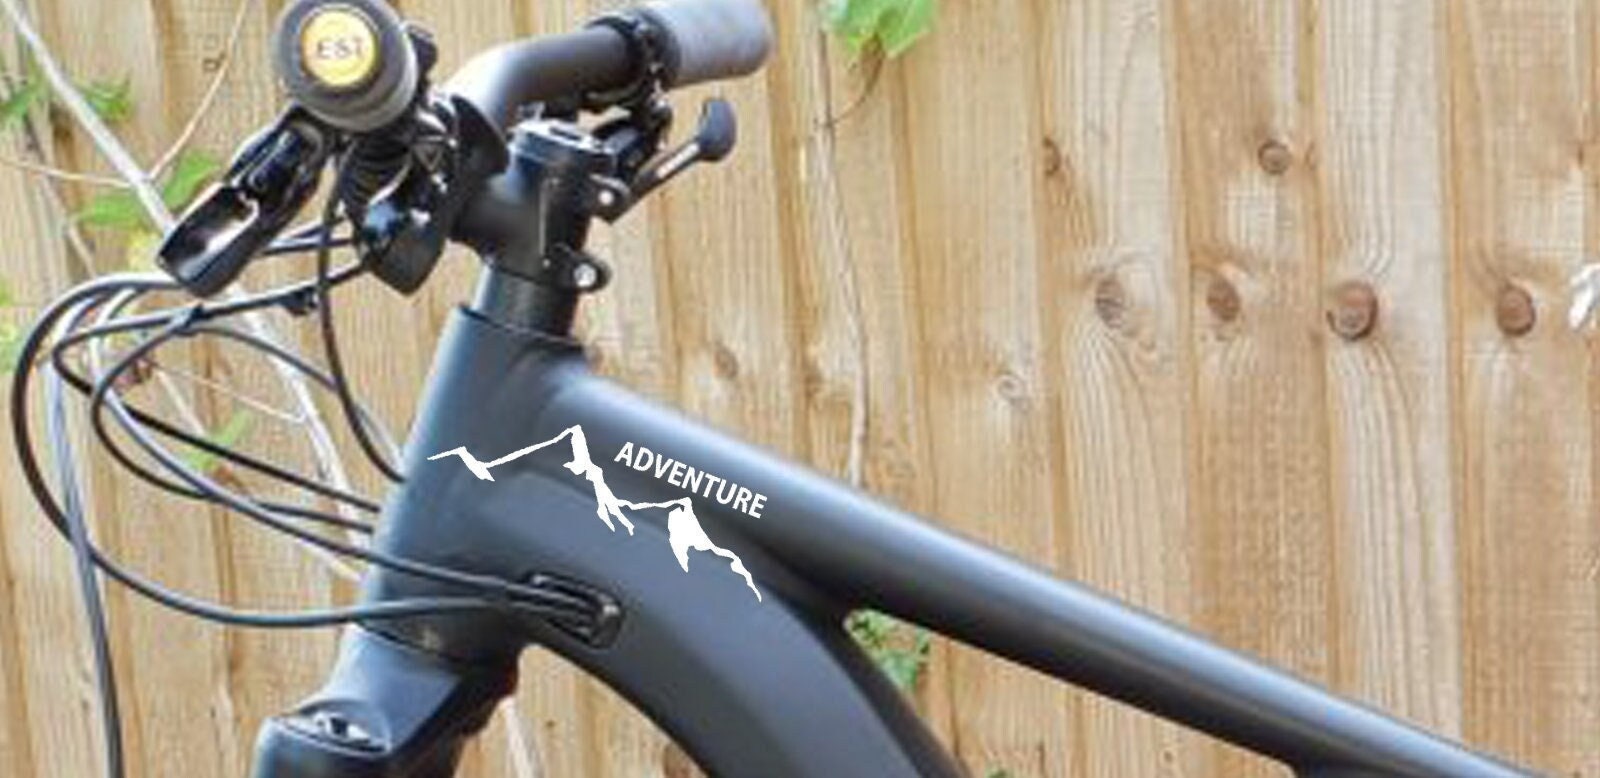 Bike frame decal for sale  